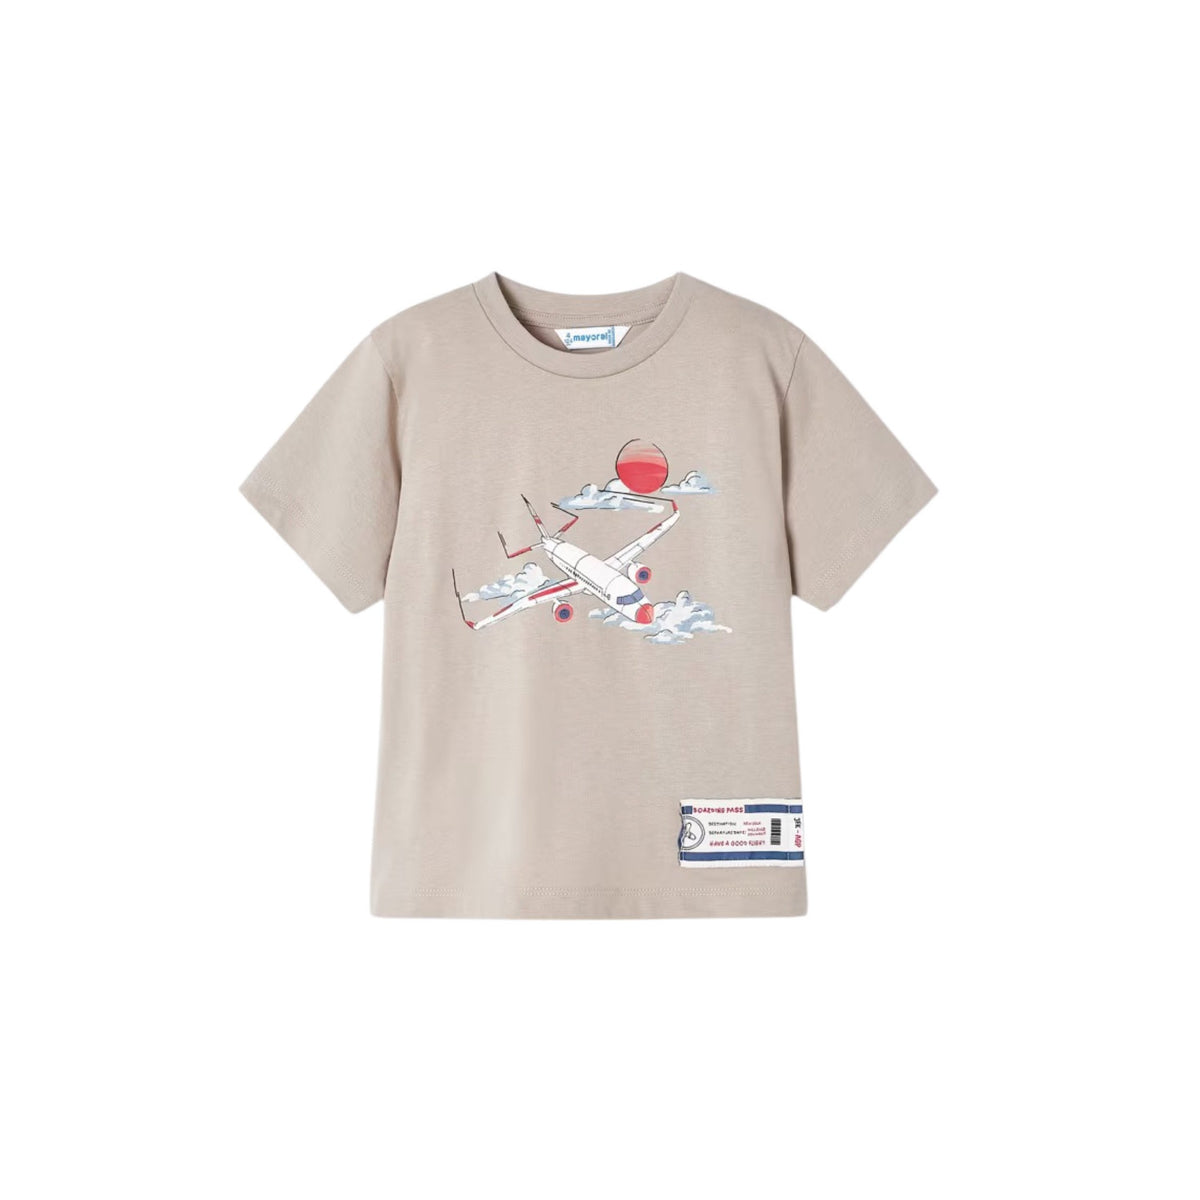 Boys Airplane Graphic T-Shirt